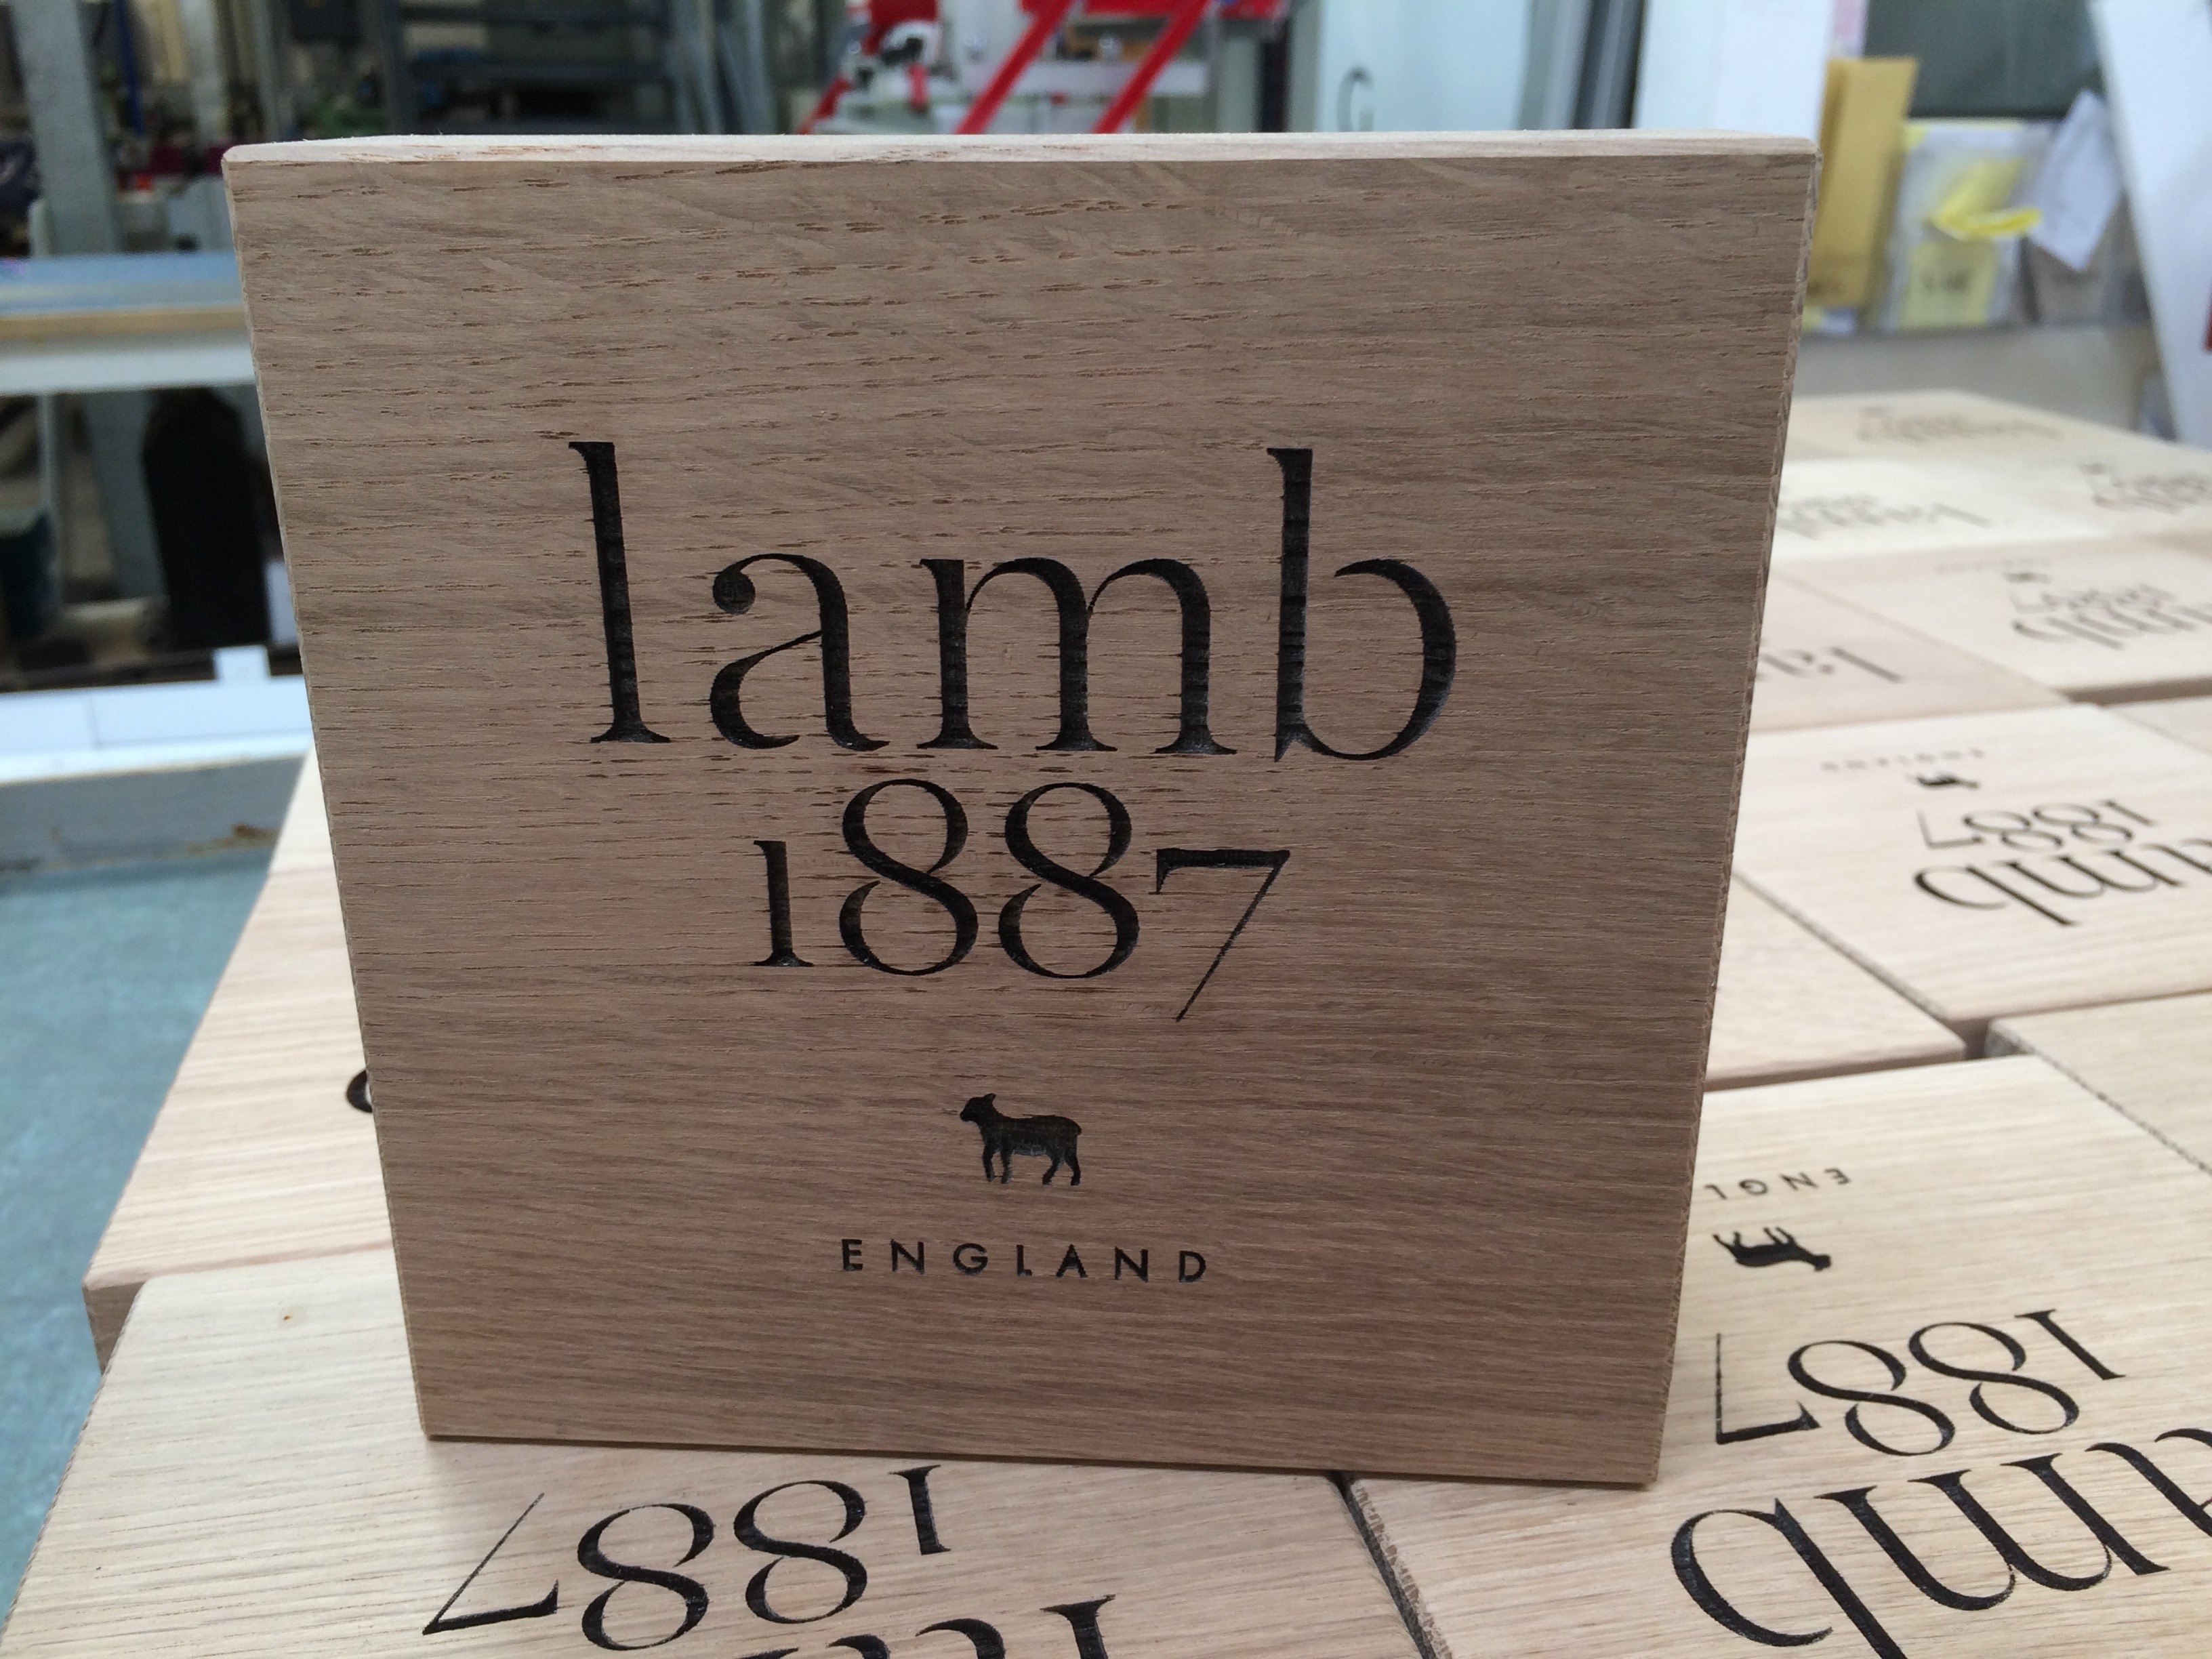 Lamb wooden laser engraved branding blocks